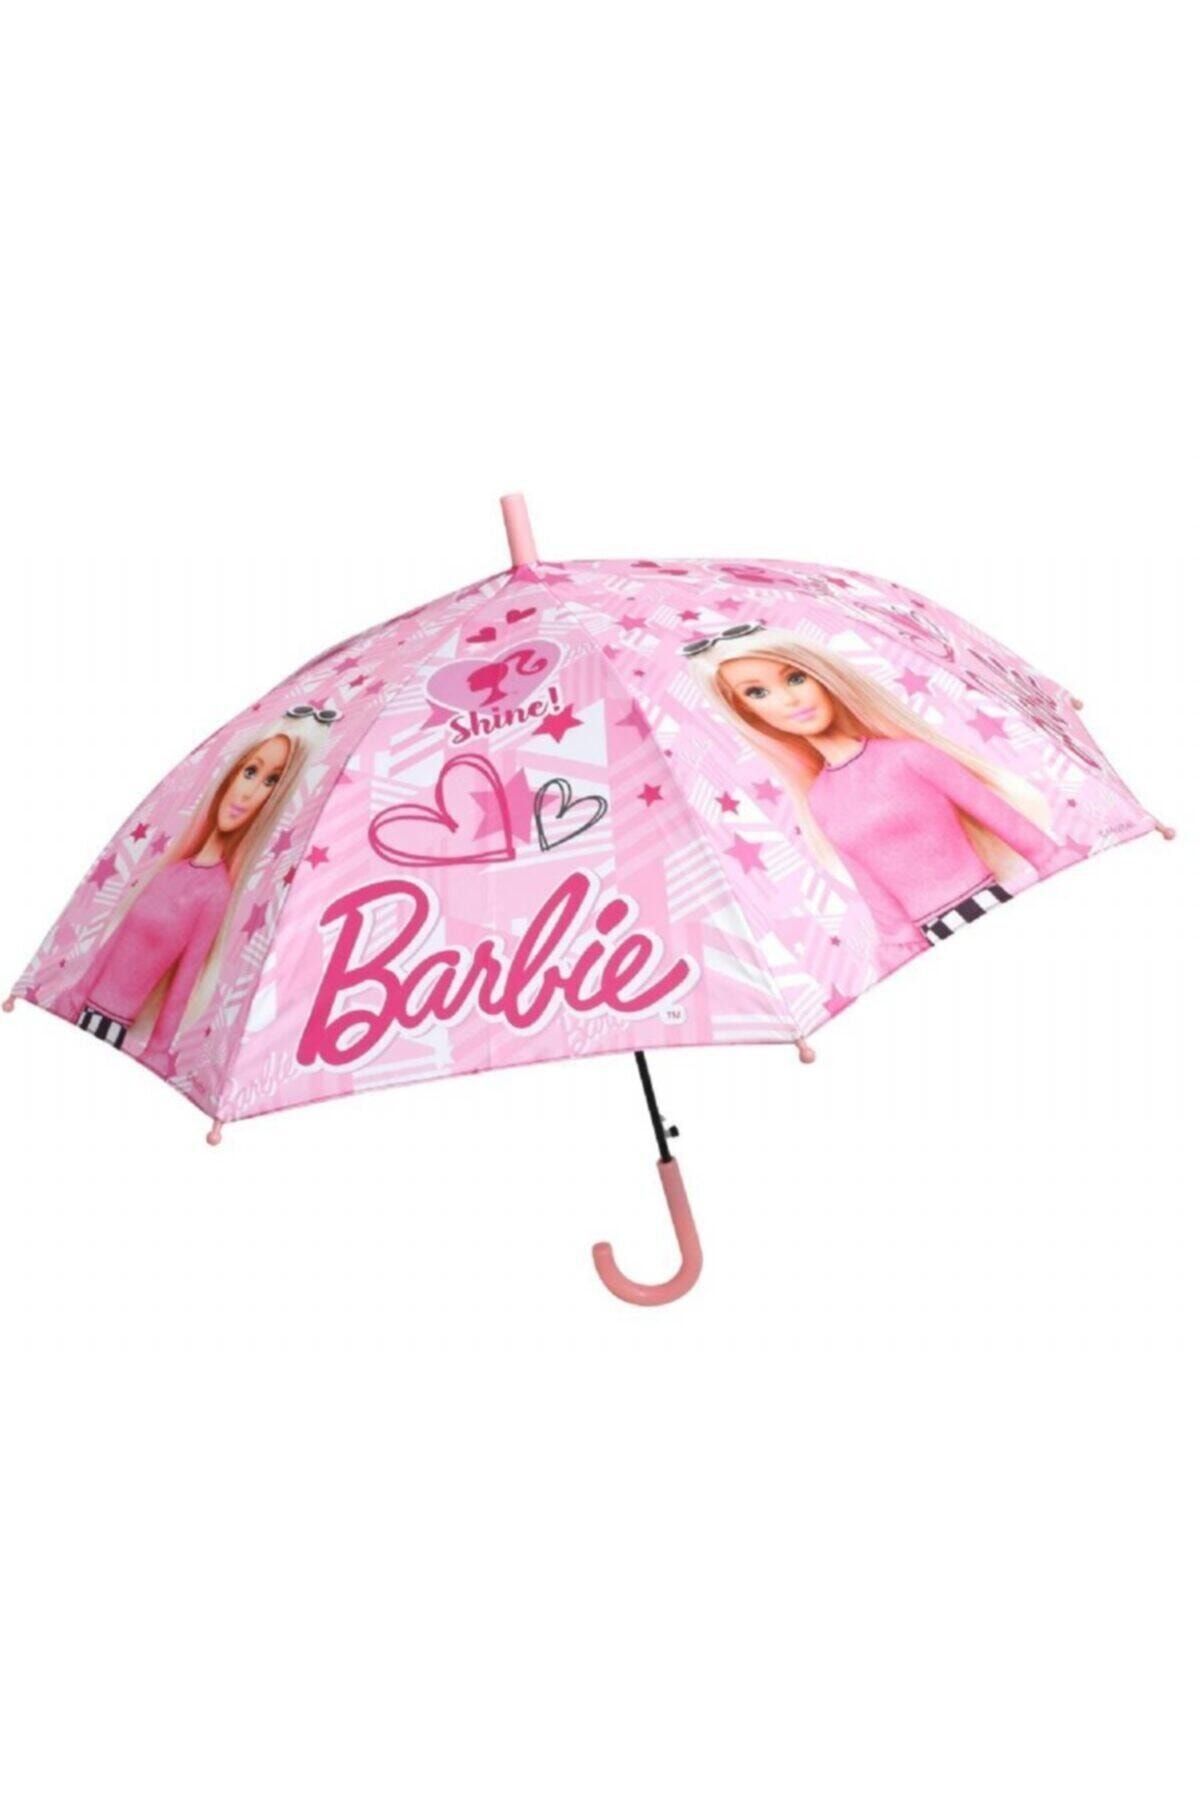 Frocx Barbie Pembe Çocuk Şemsiyesi.